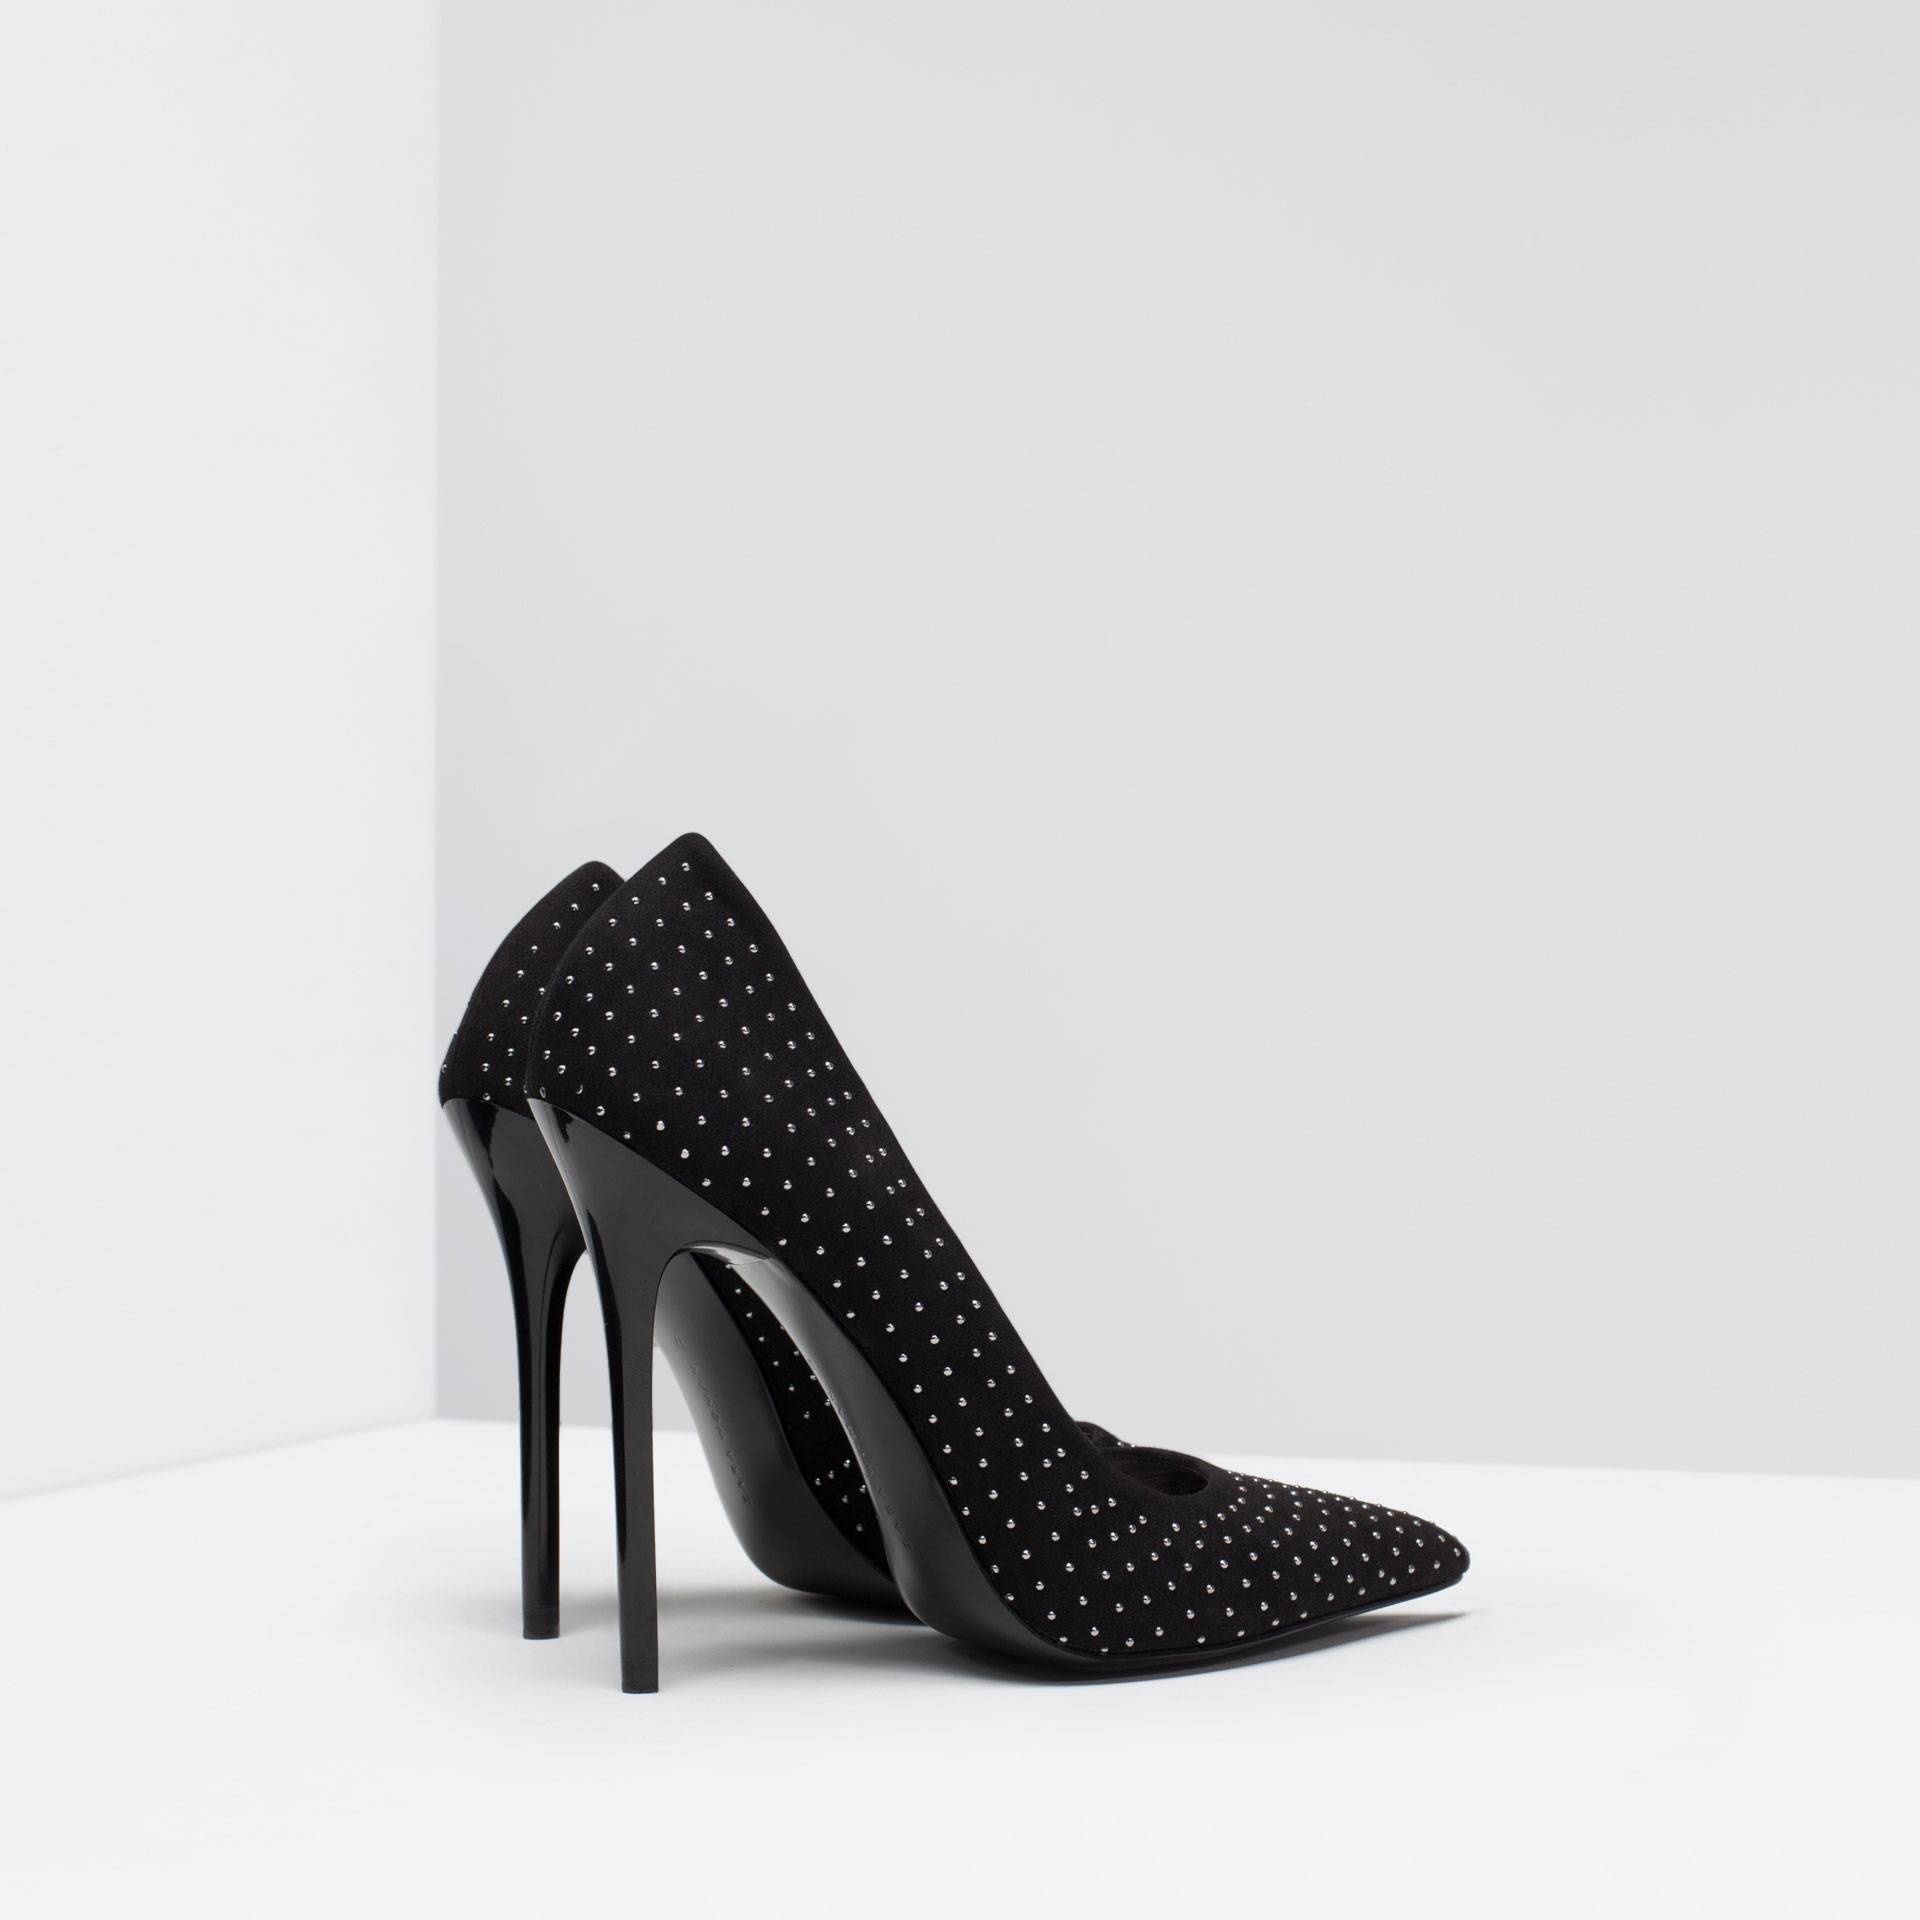 Decolleté nere con strass Zara - Shoeplay Fashion blog di scarpe da donna